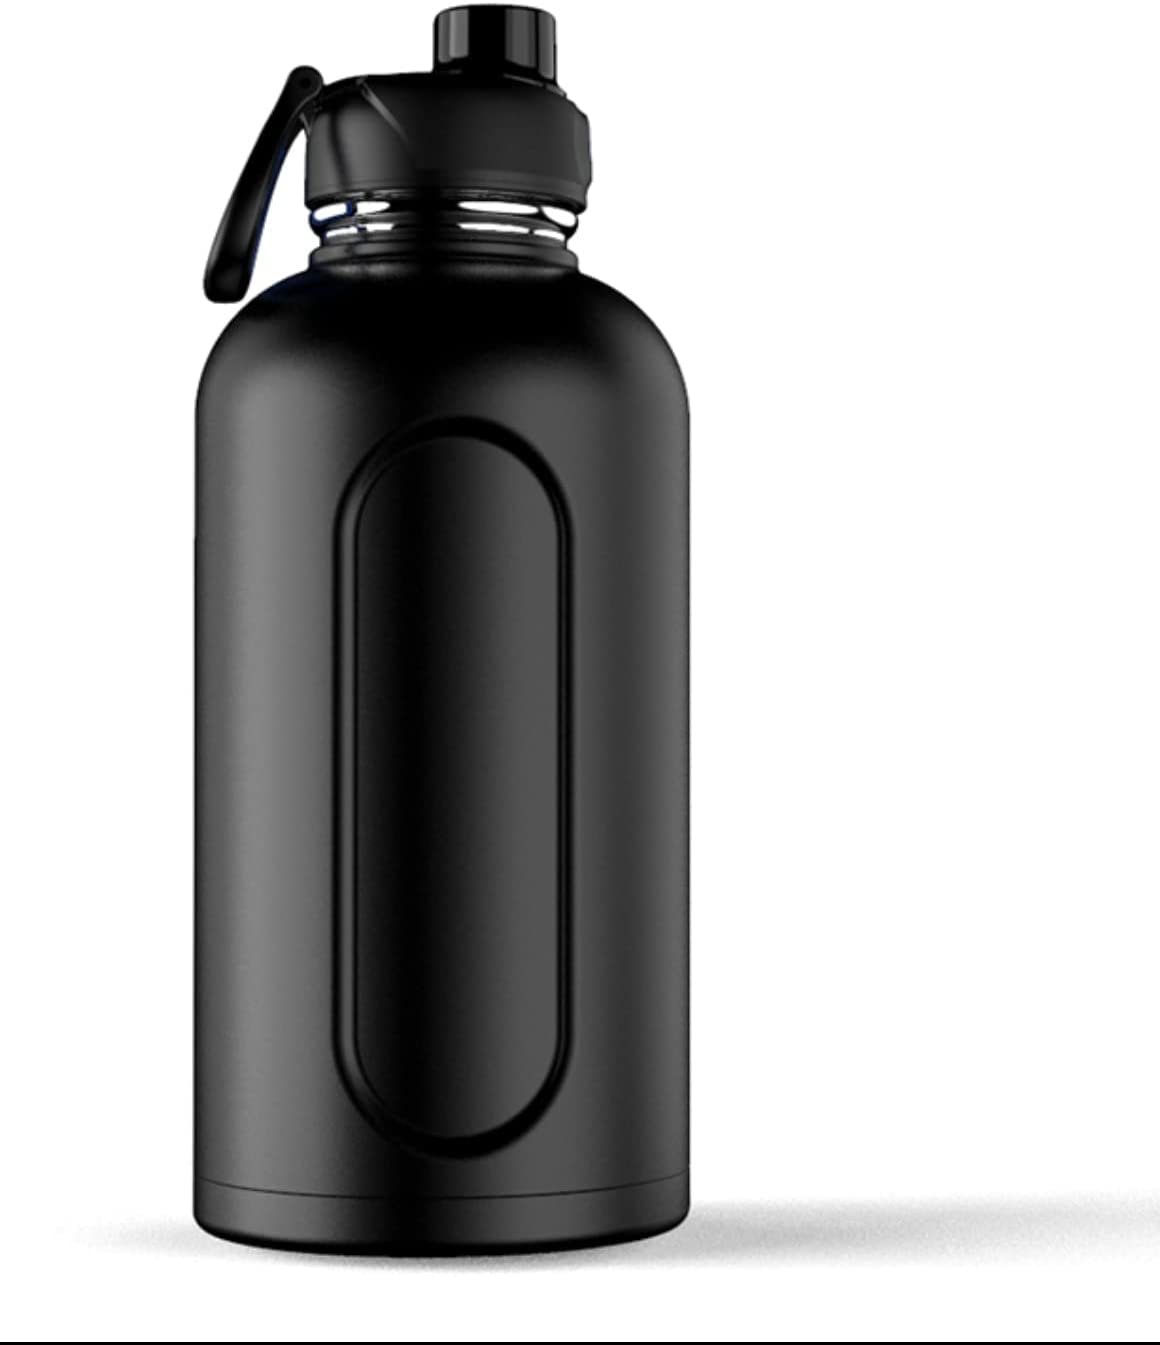 ShakeSphere Stainless Steel water bottle 35.2 Fl Oz Black 